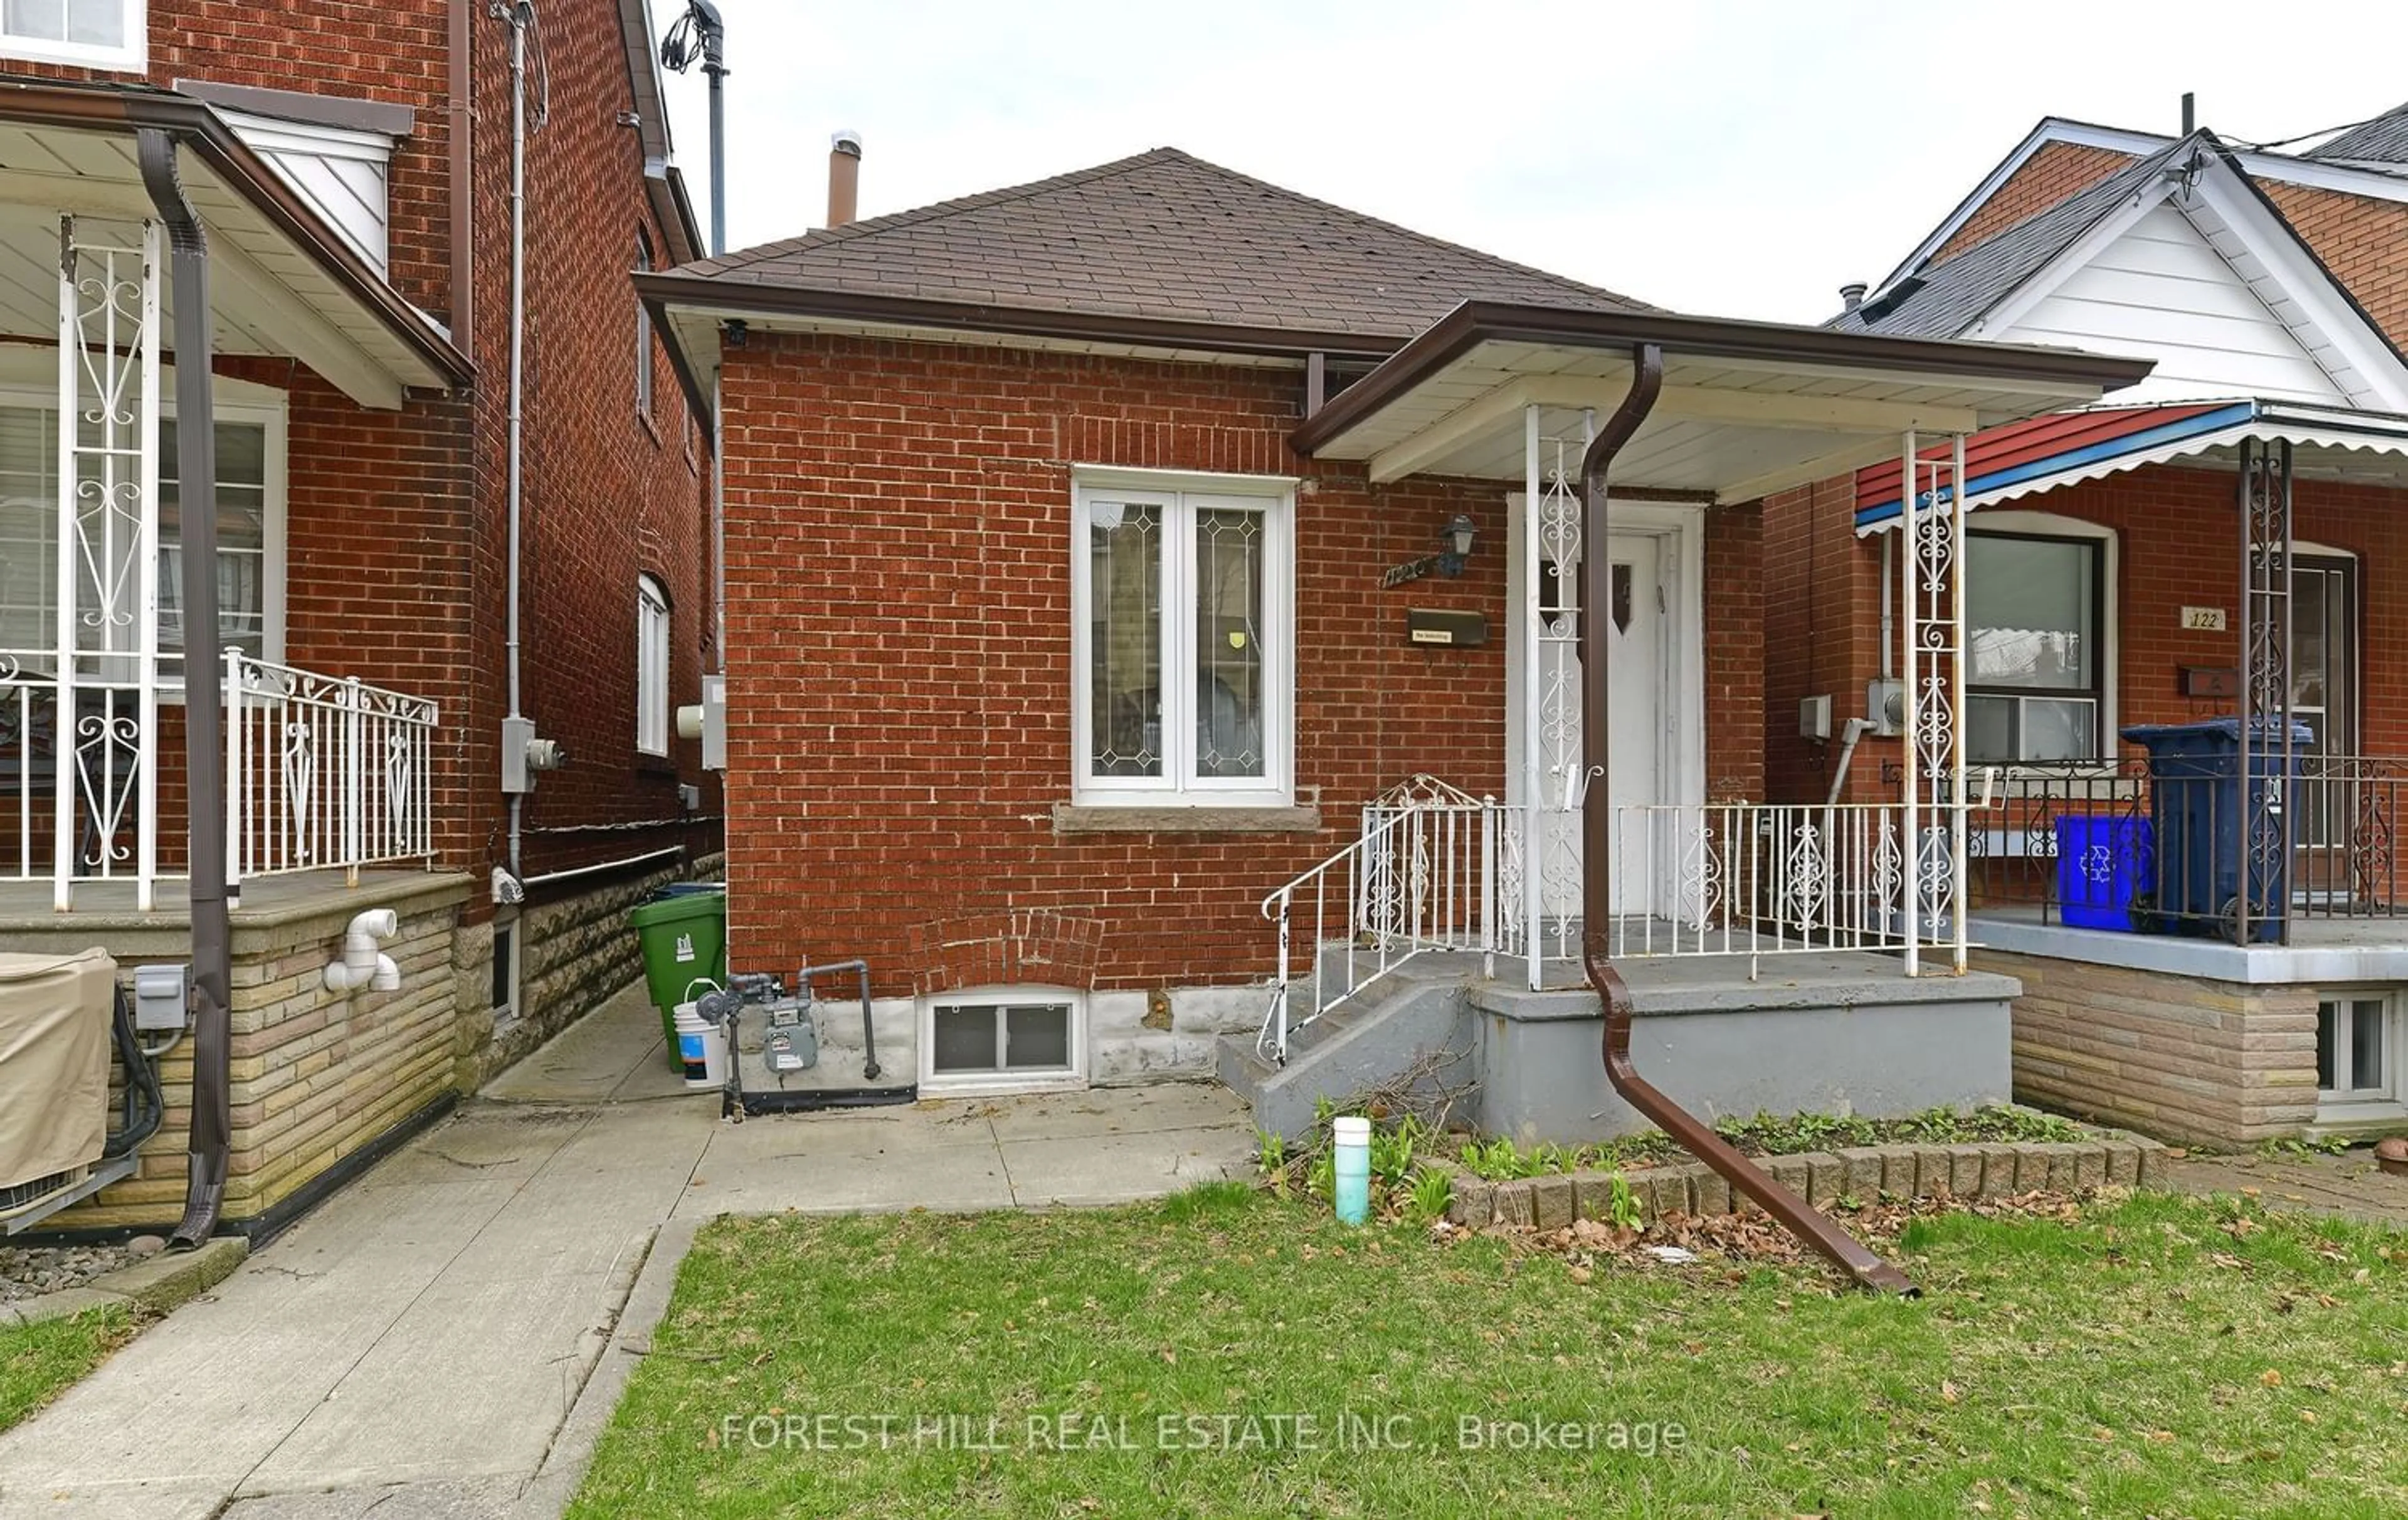 Home with brick exterior material for 120 Earlscourt Ave, Toronto Ontario M6E 4A9